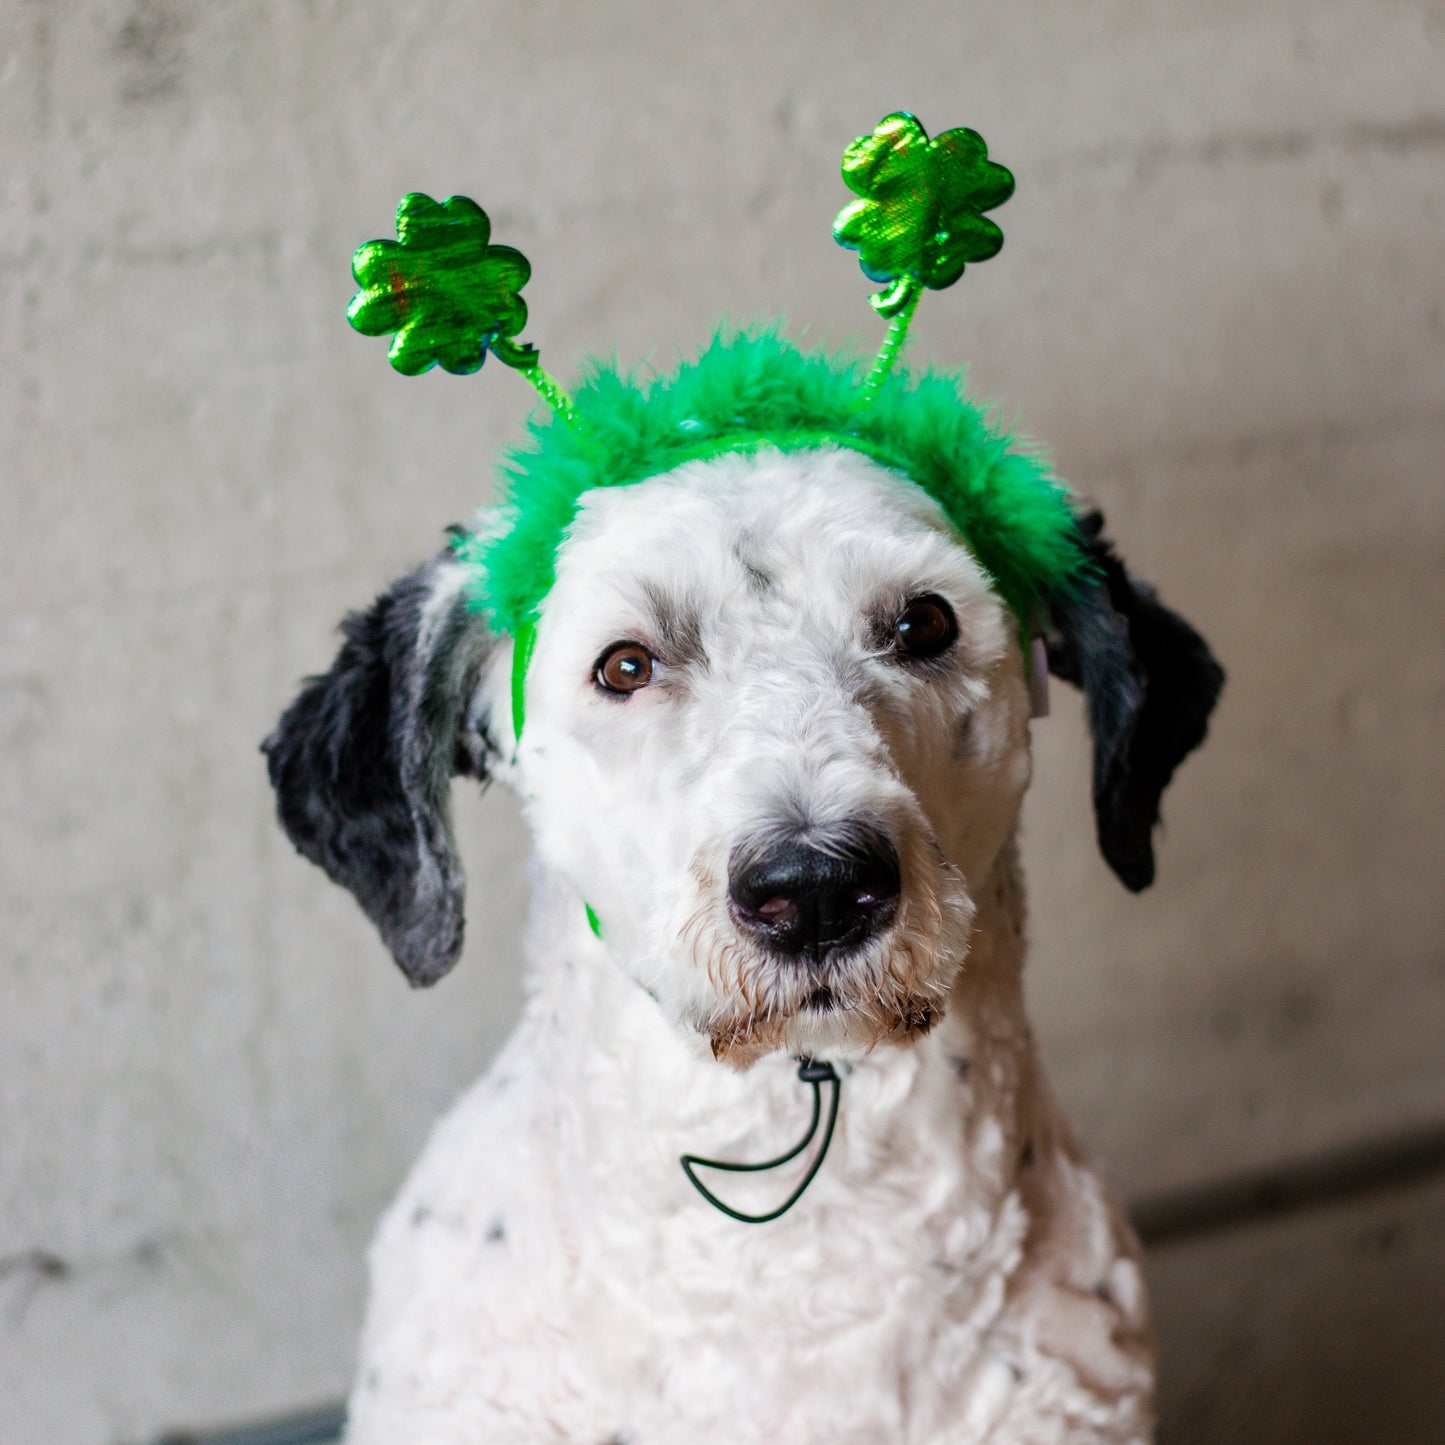 Midlee St. Patrick's Day Shamrock Dog Headband